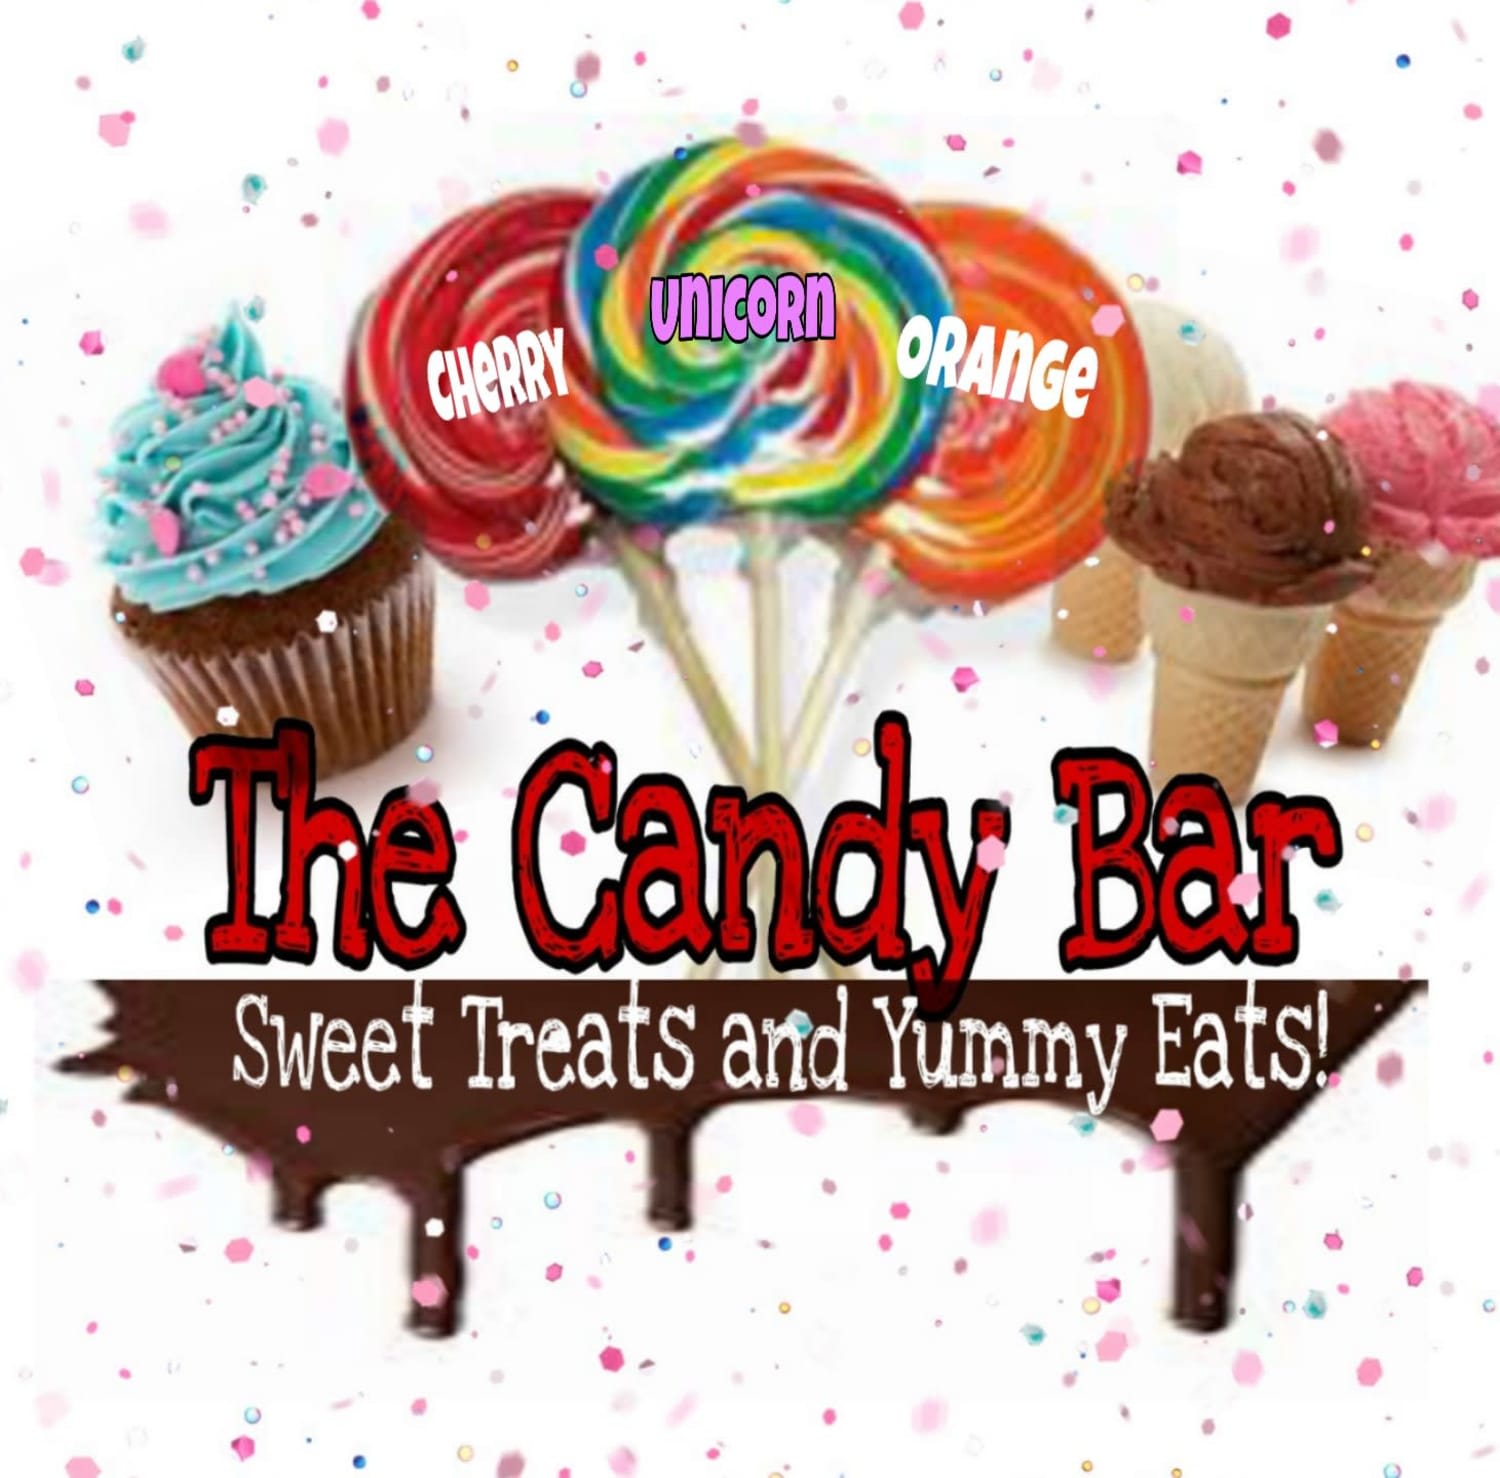 The Candy Bar